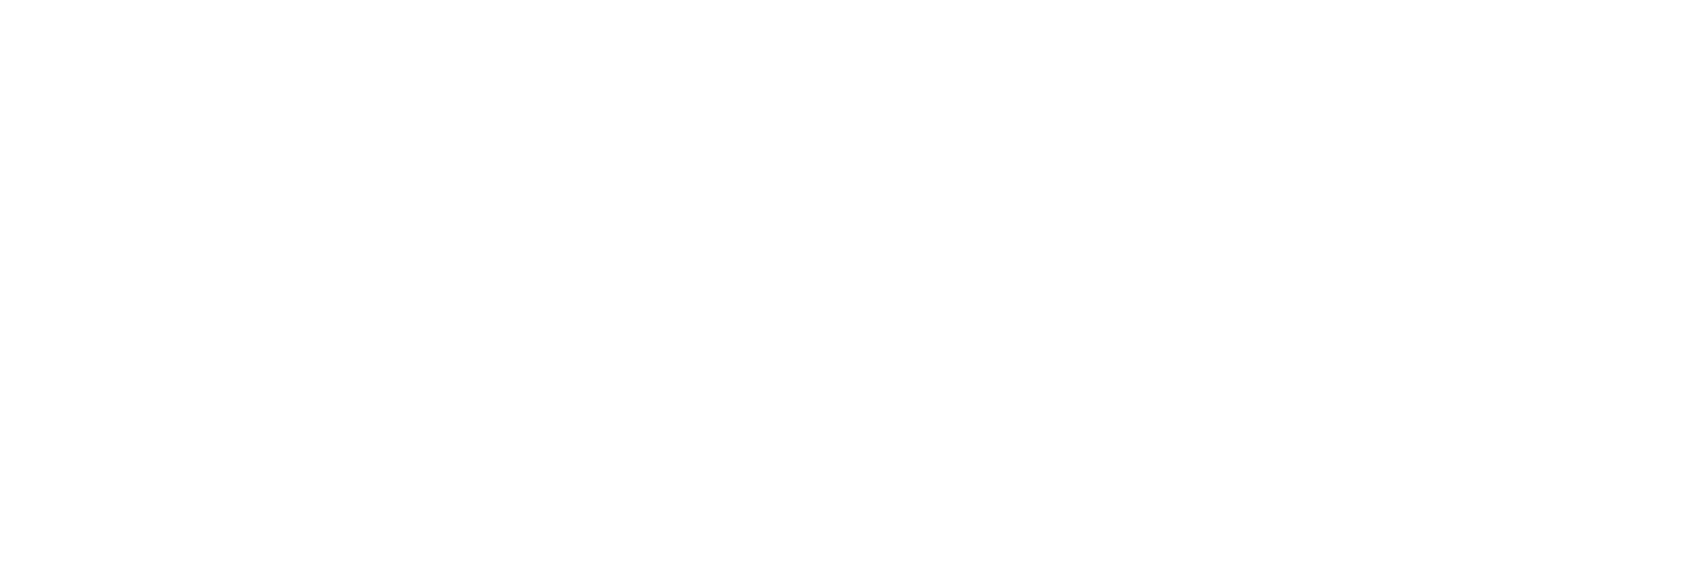 wake_up_logo_white